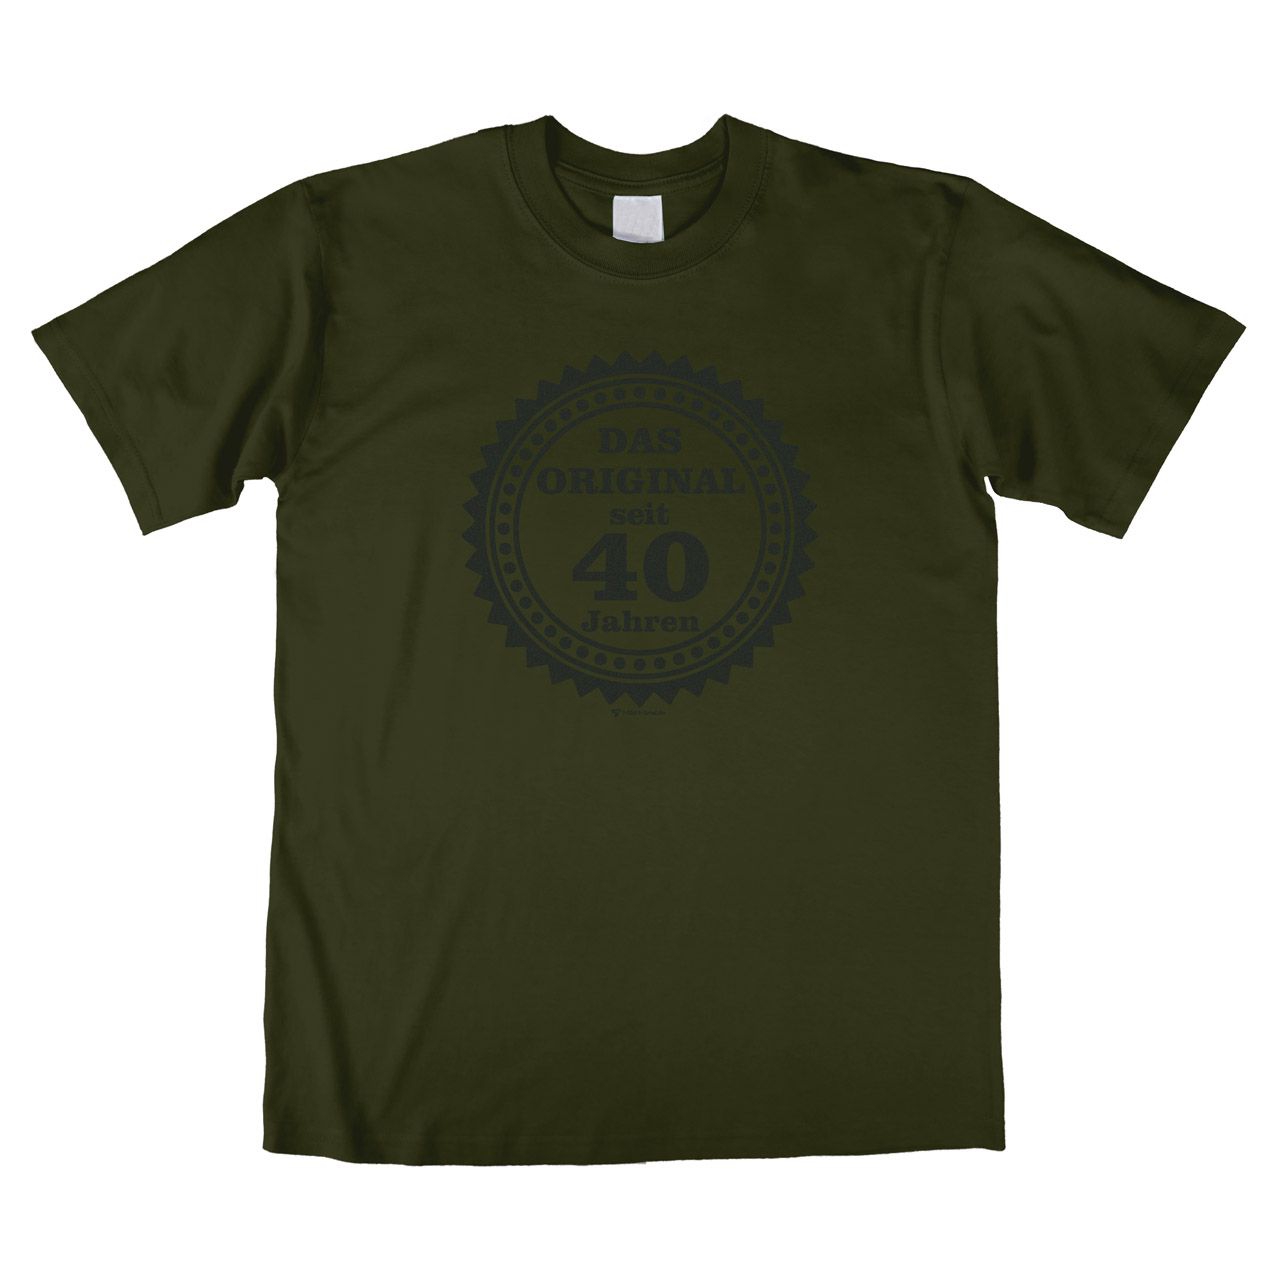 Original seit 40 Unisex T-Shirt khaki Large